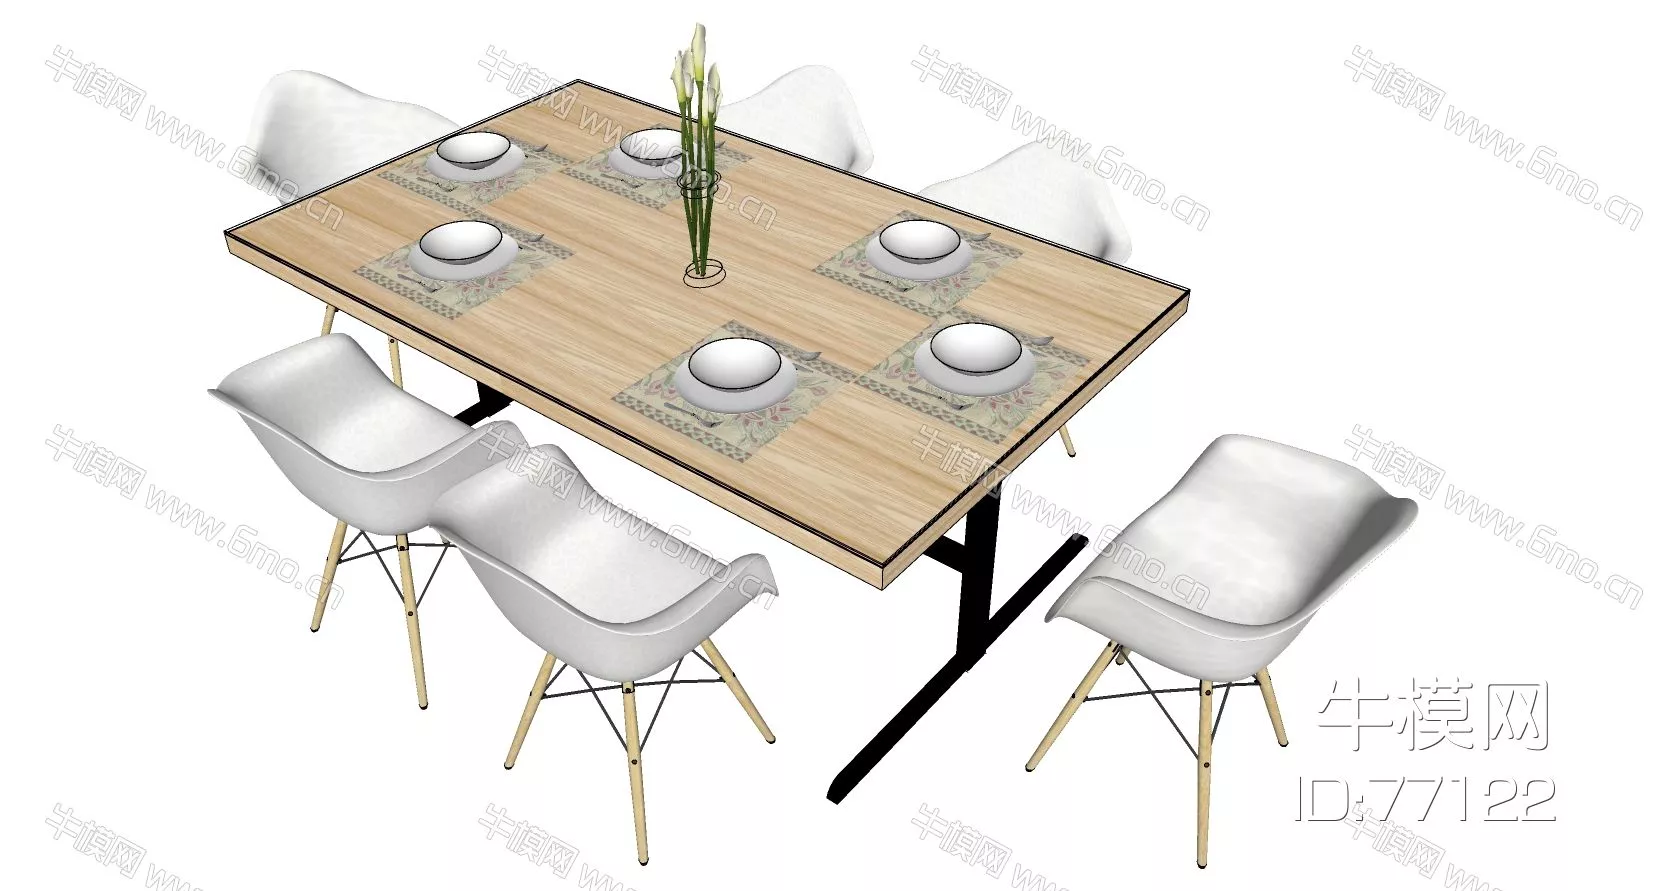 NORDIC TEA TABLE SET - SKETCHUP 3D MODEL - ENSCAPE - 77122